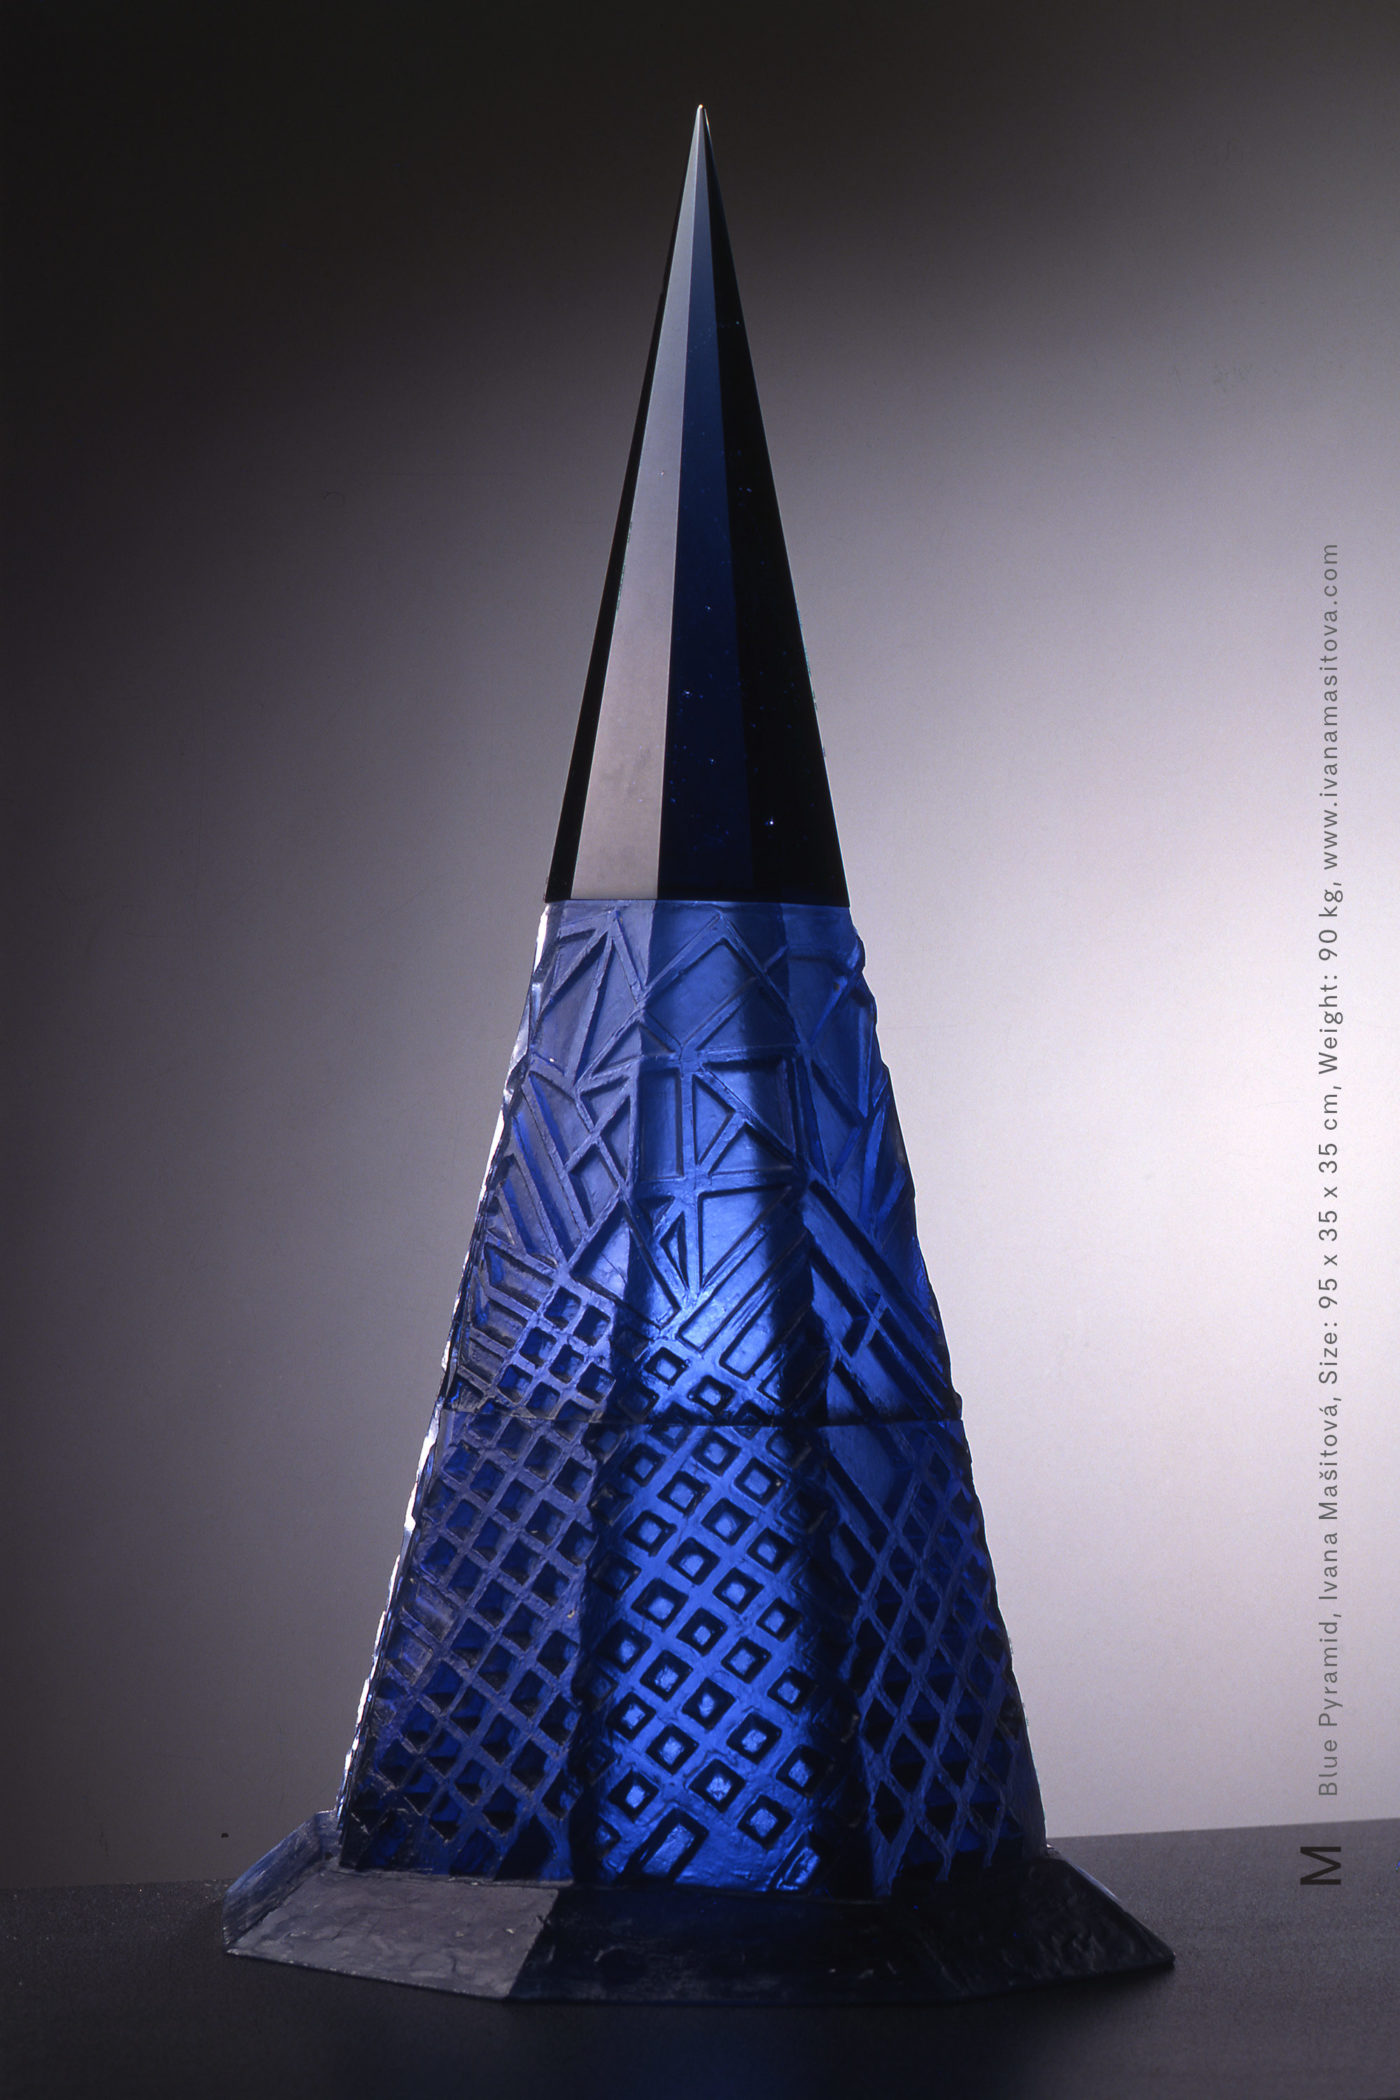 Modra-pyramida_Blue-Pyramid,95x35x35cm,90kg